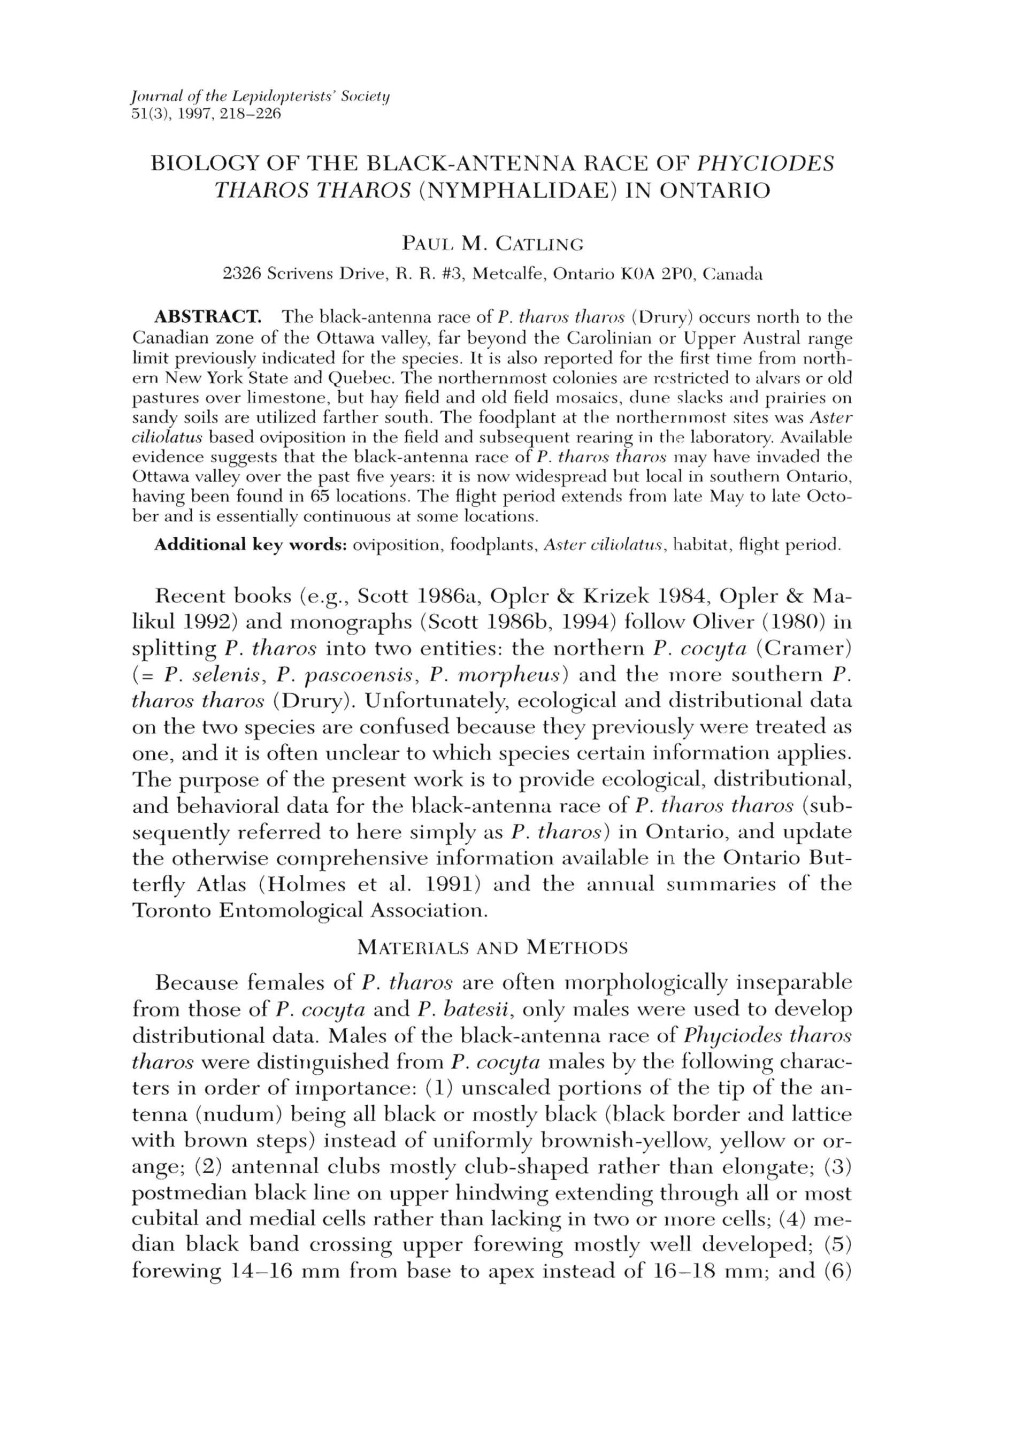 BIOLOGY of the BLACK-ANTENNA RACE of PHYCIODES Tliaros THAROS (NYMPHALIDAE) in ONTARIO